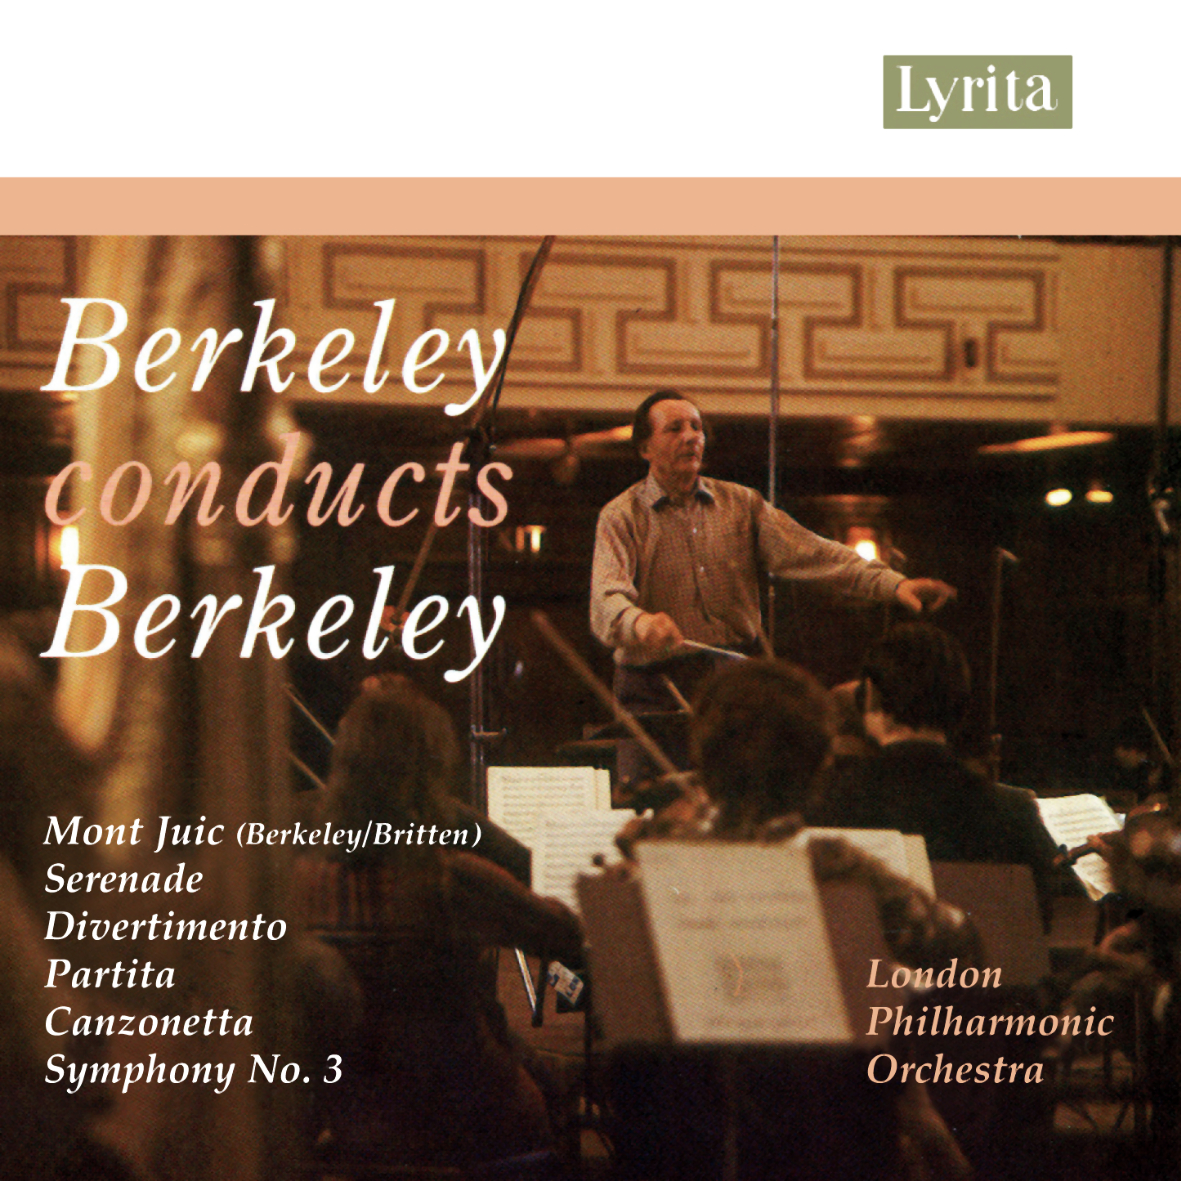 Lennox Berkeley conducting the LPO (Cover of the Lyrita recording SRCD226).